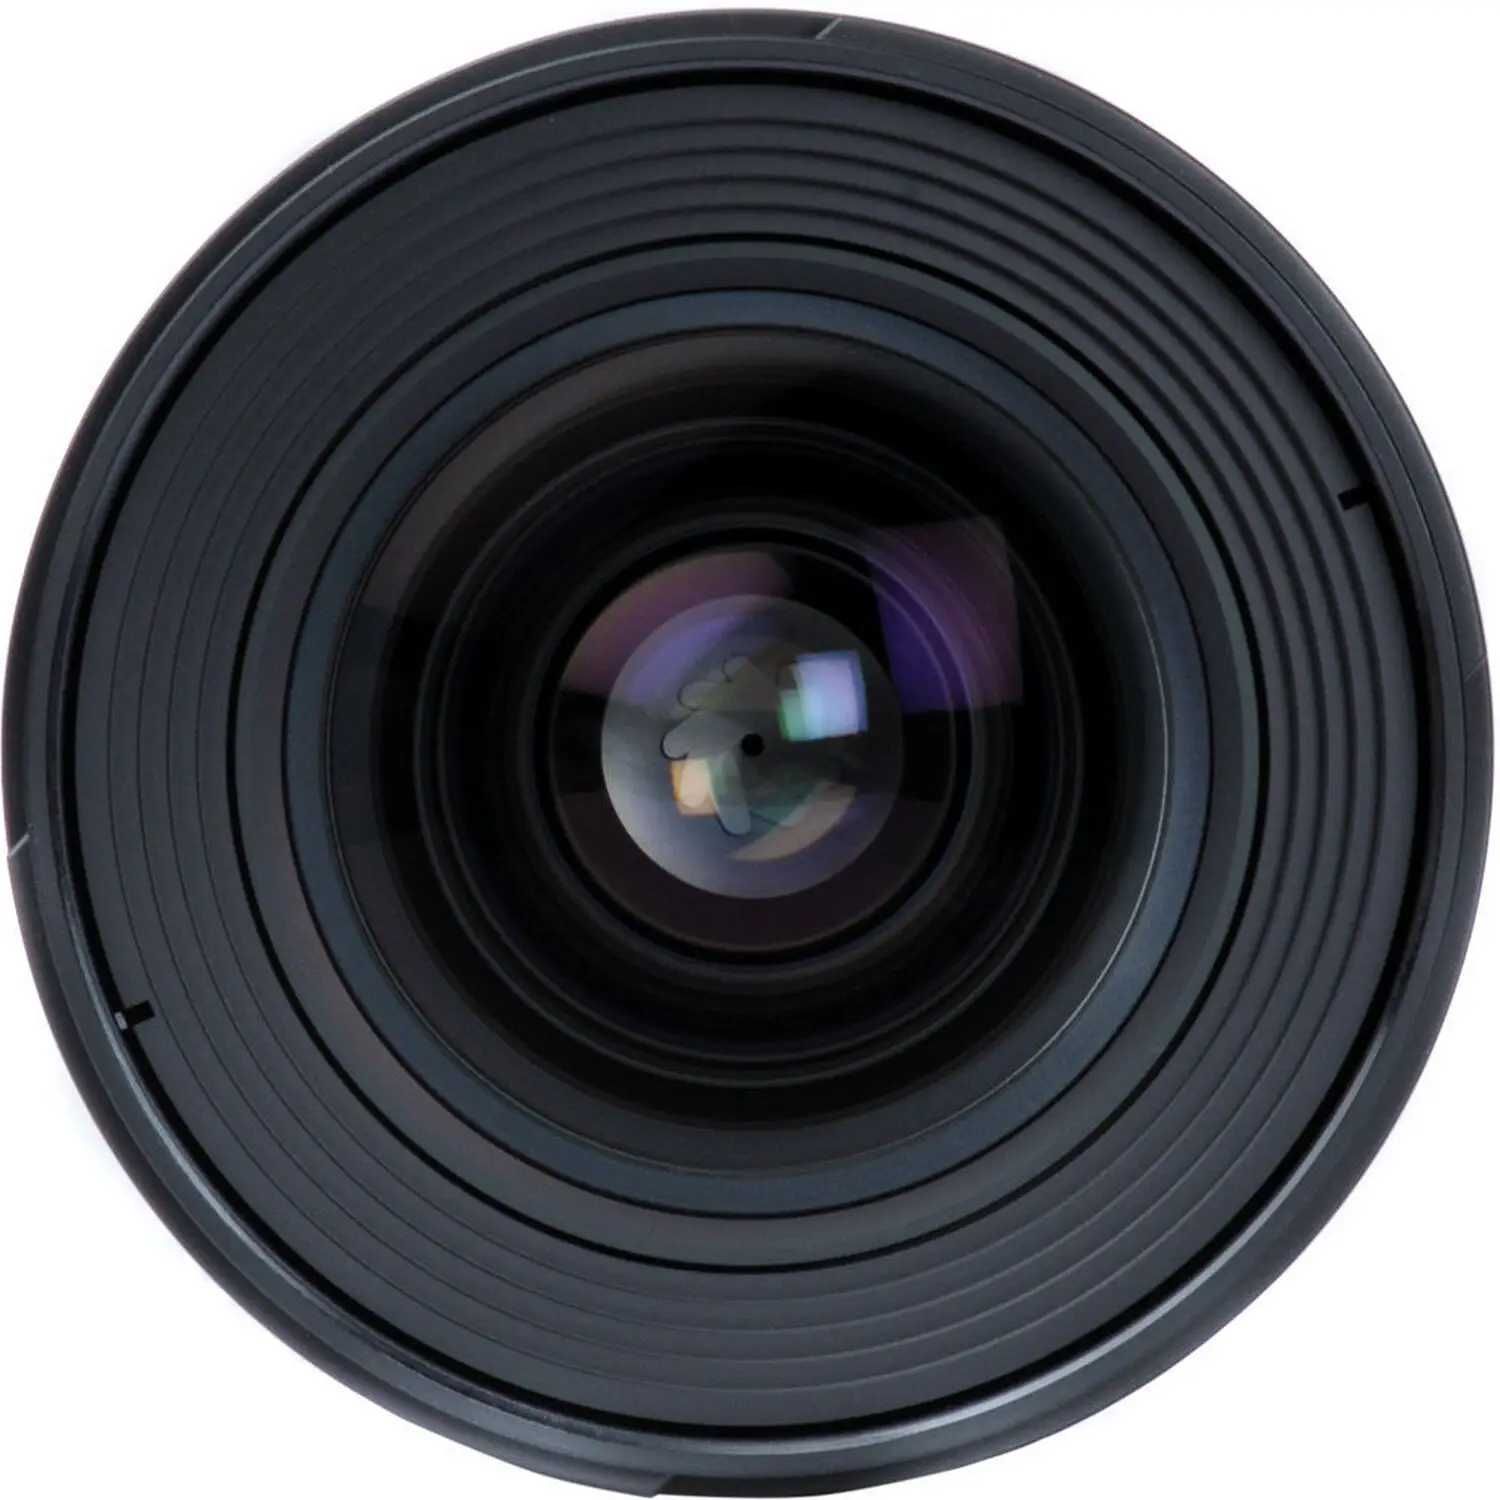 Об’єктив Nikon AF-S 24mm f/1.4G ED